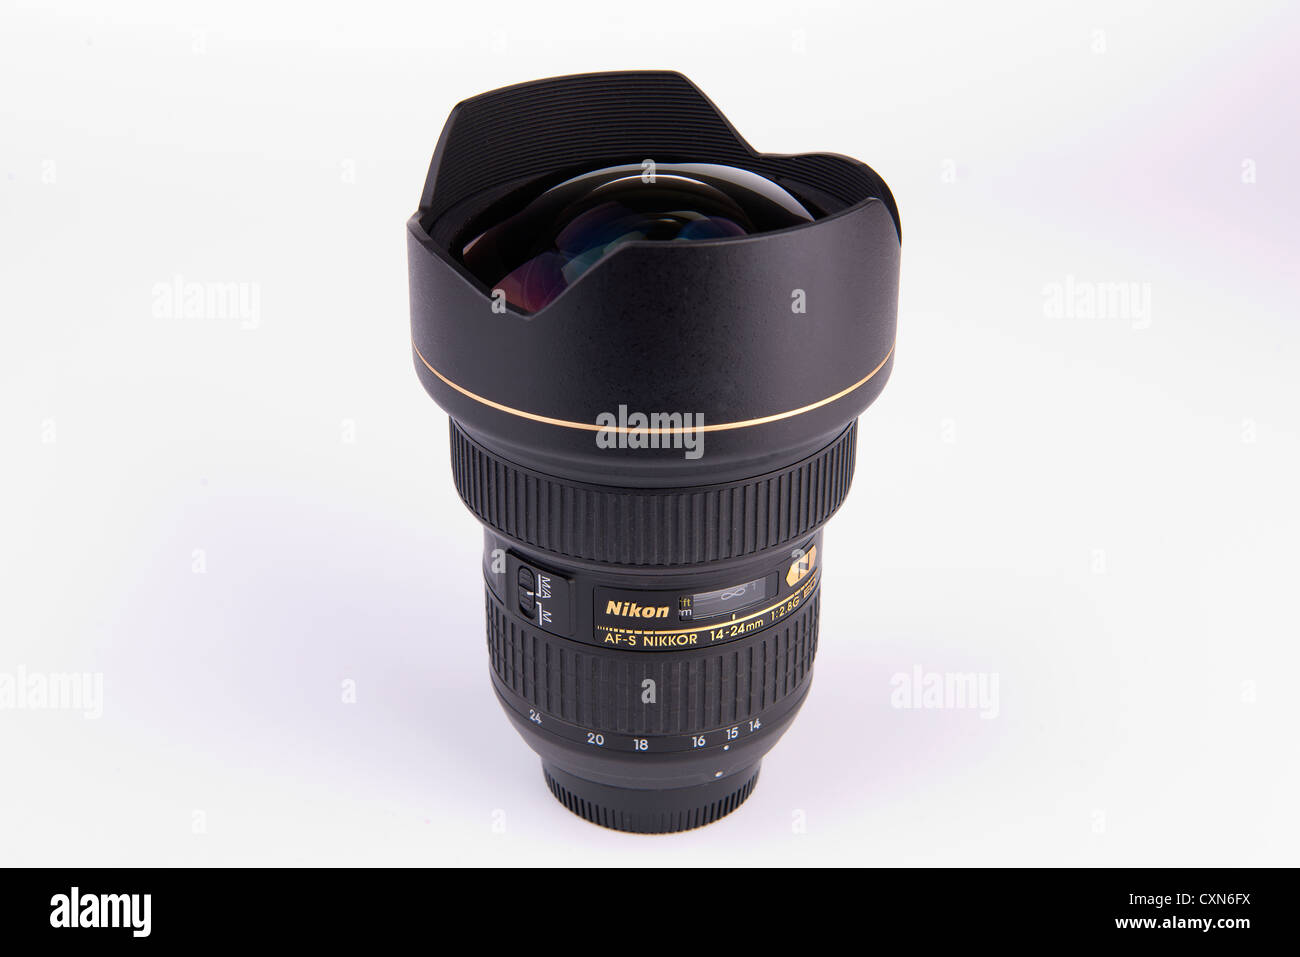 14-24 mm Nikon lens Stock Photo